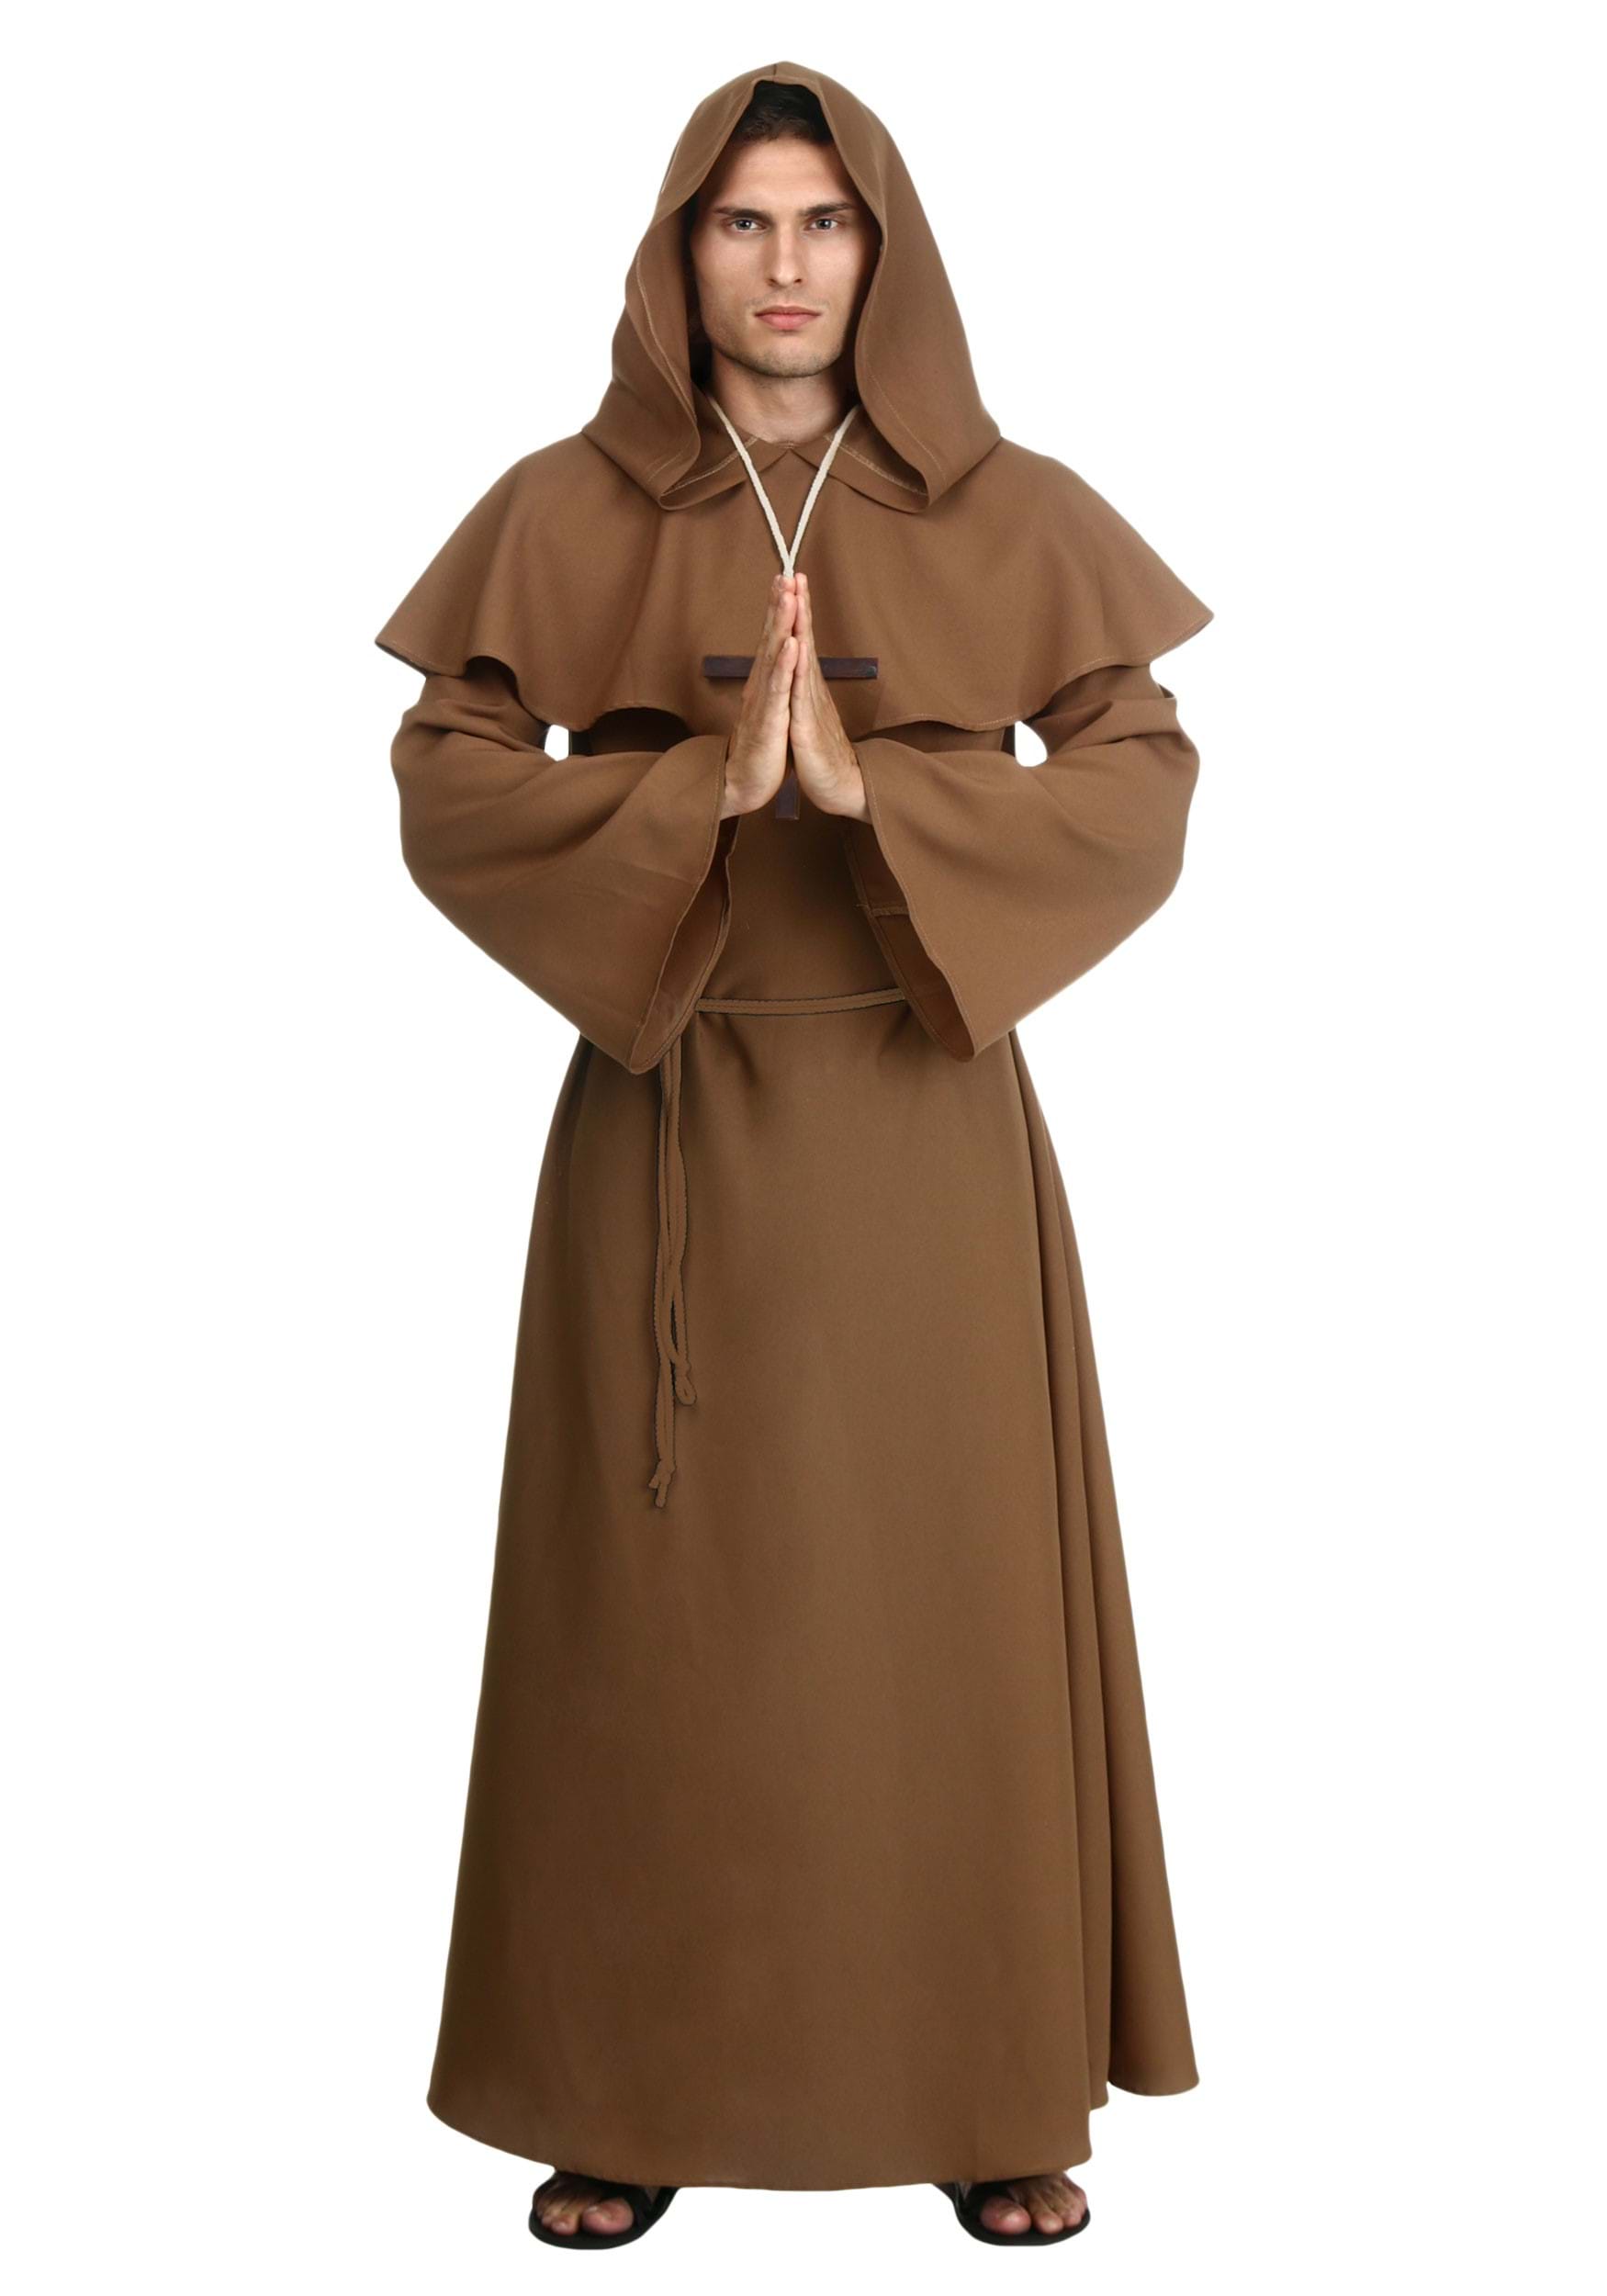 Plus Size Mens Brown Monk Robe Costume